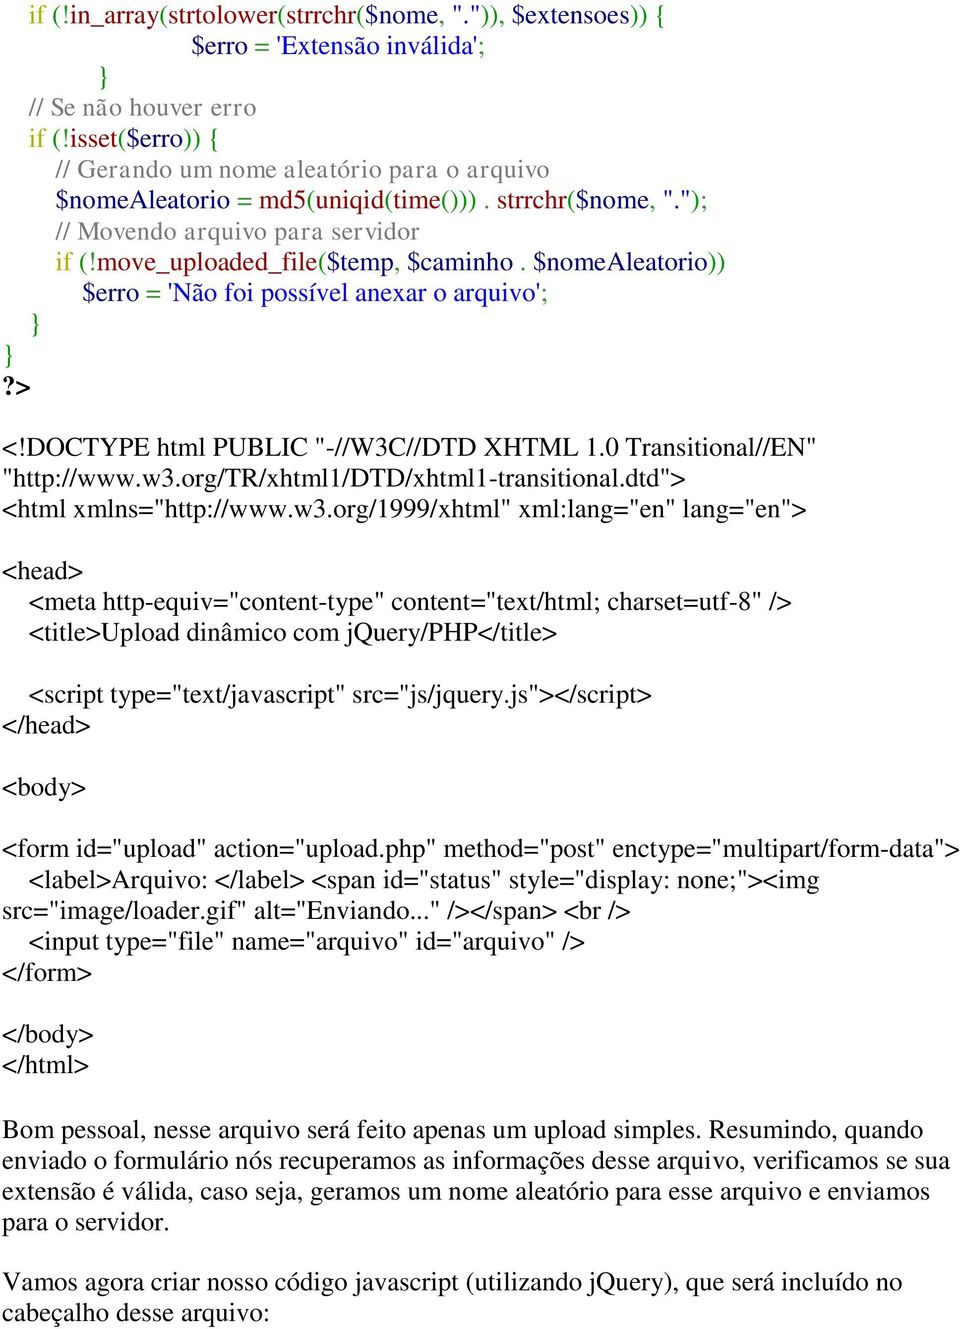 $nomealeatorio)) $erro = 'Não foi possível anexar o arquivo';?> <!DOCTYPE html PUBLIC "-//W3C//DTD XHTML 1.0 Transitional//EN" "http://www.w3.org/tr/xhtml1/dtd/xhtml1-transitional.